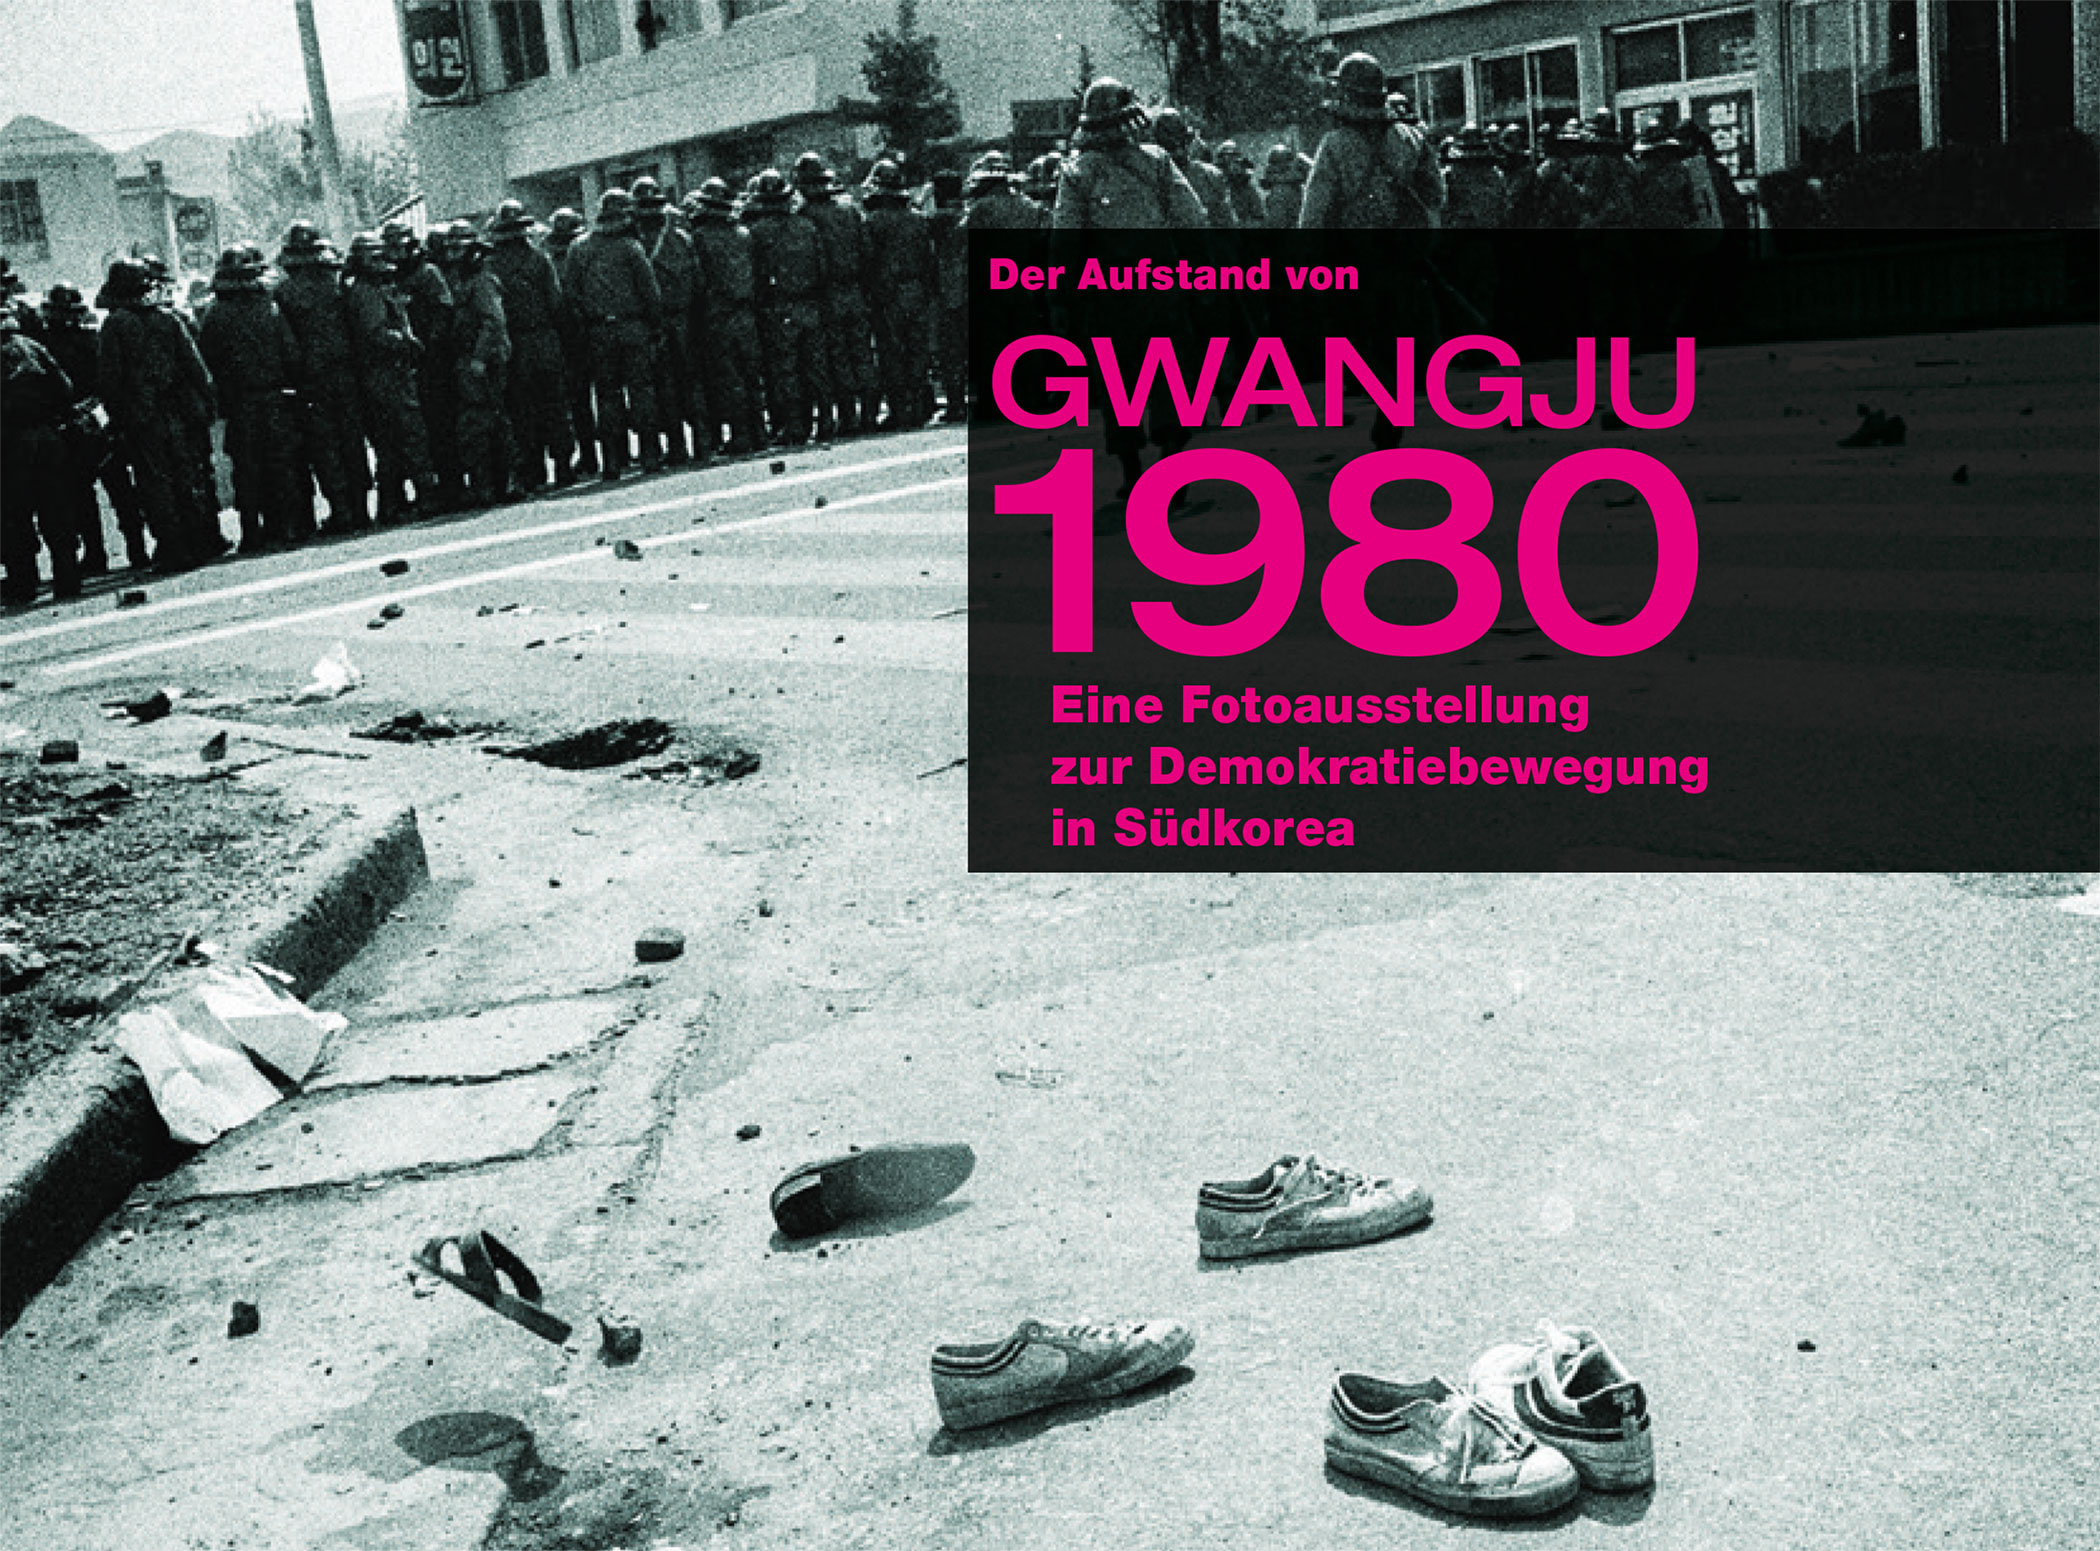 Gwangju 1980 in Glashuetten